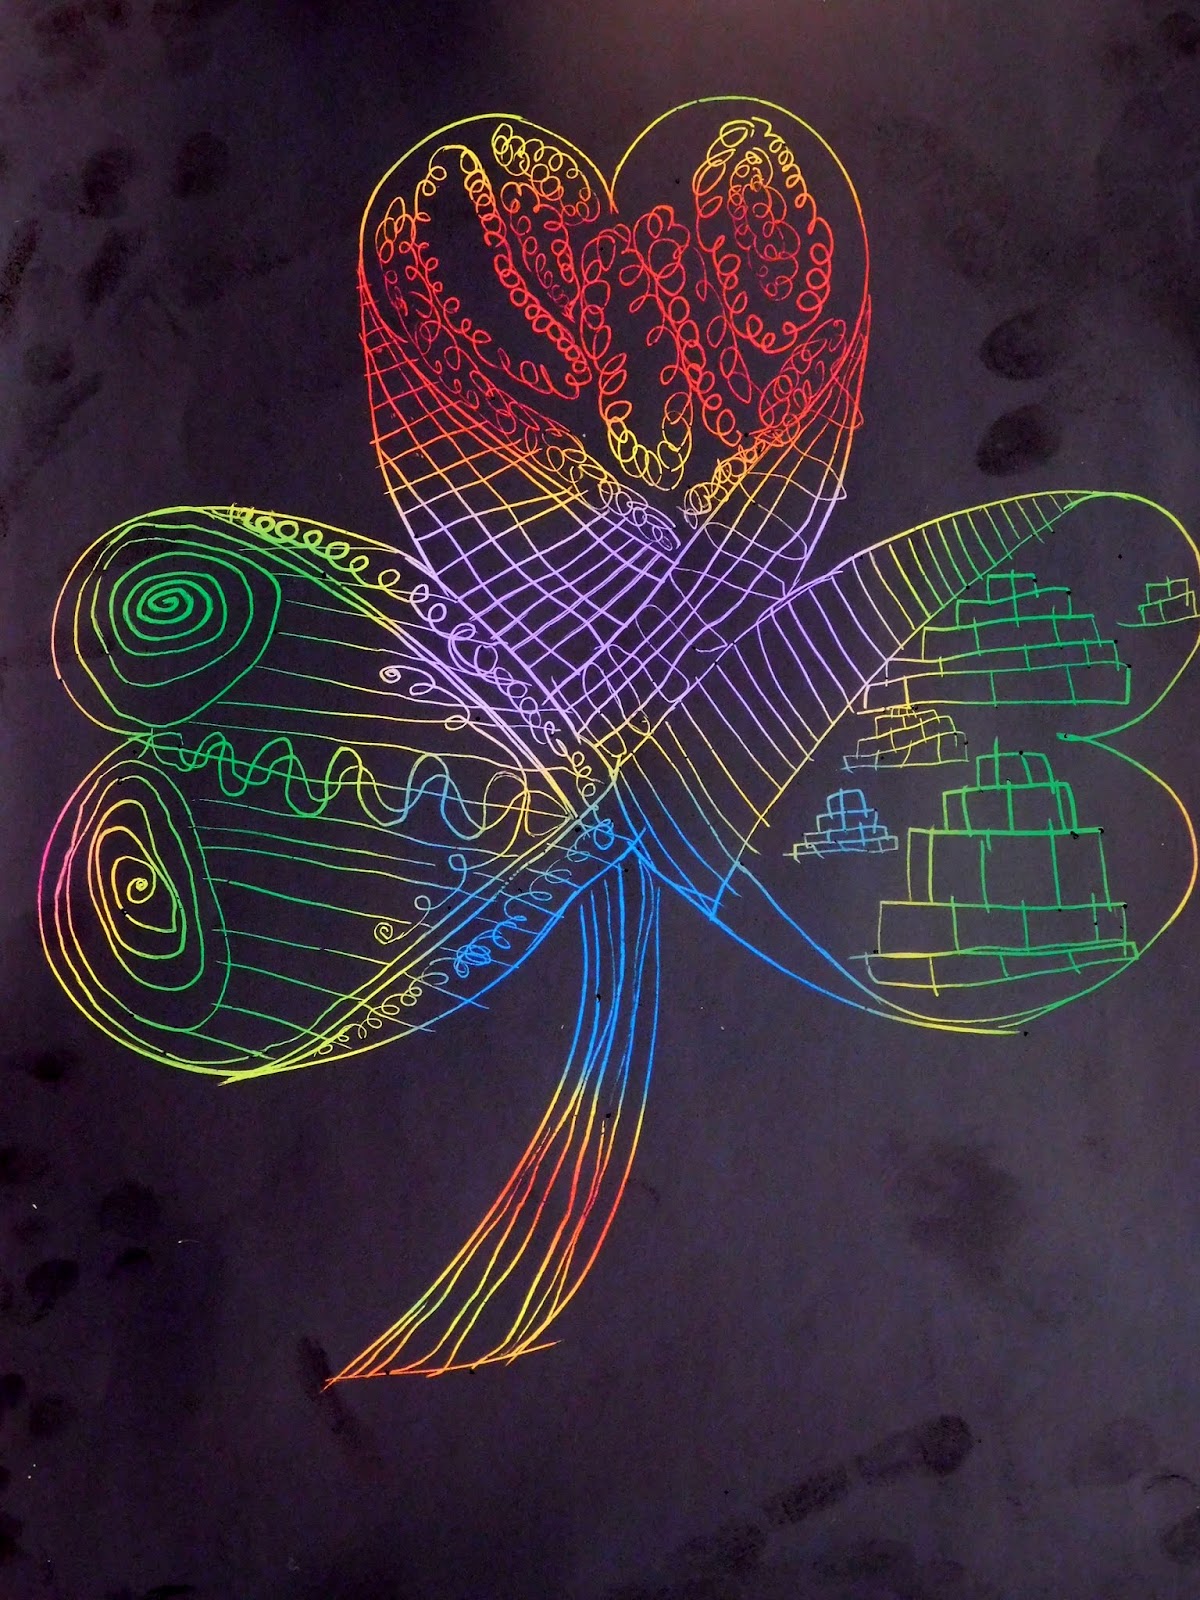 Rainbow Floral Design on Scratch Paper, Zentangle inspired, DIY  SCRATCH-OFF ART